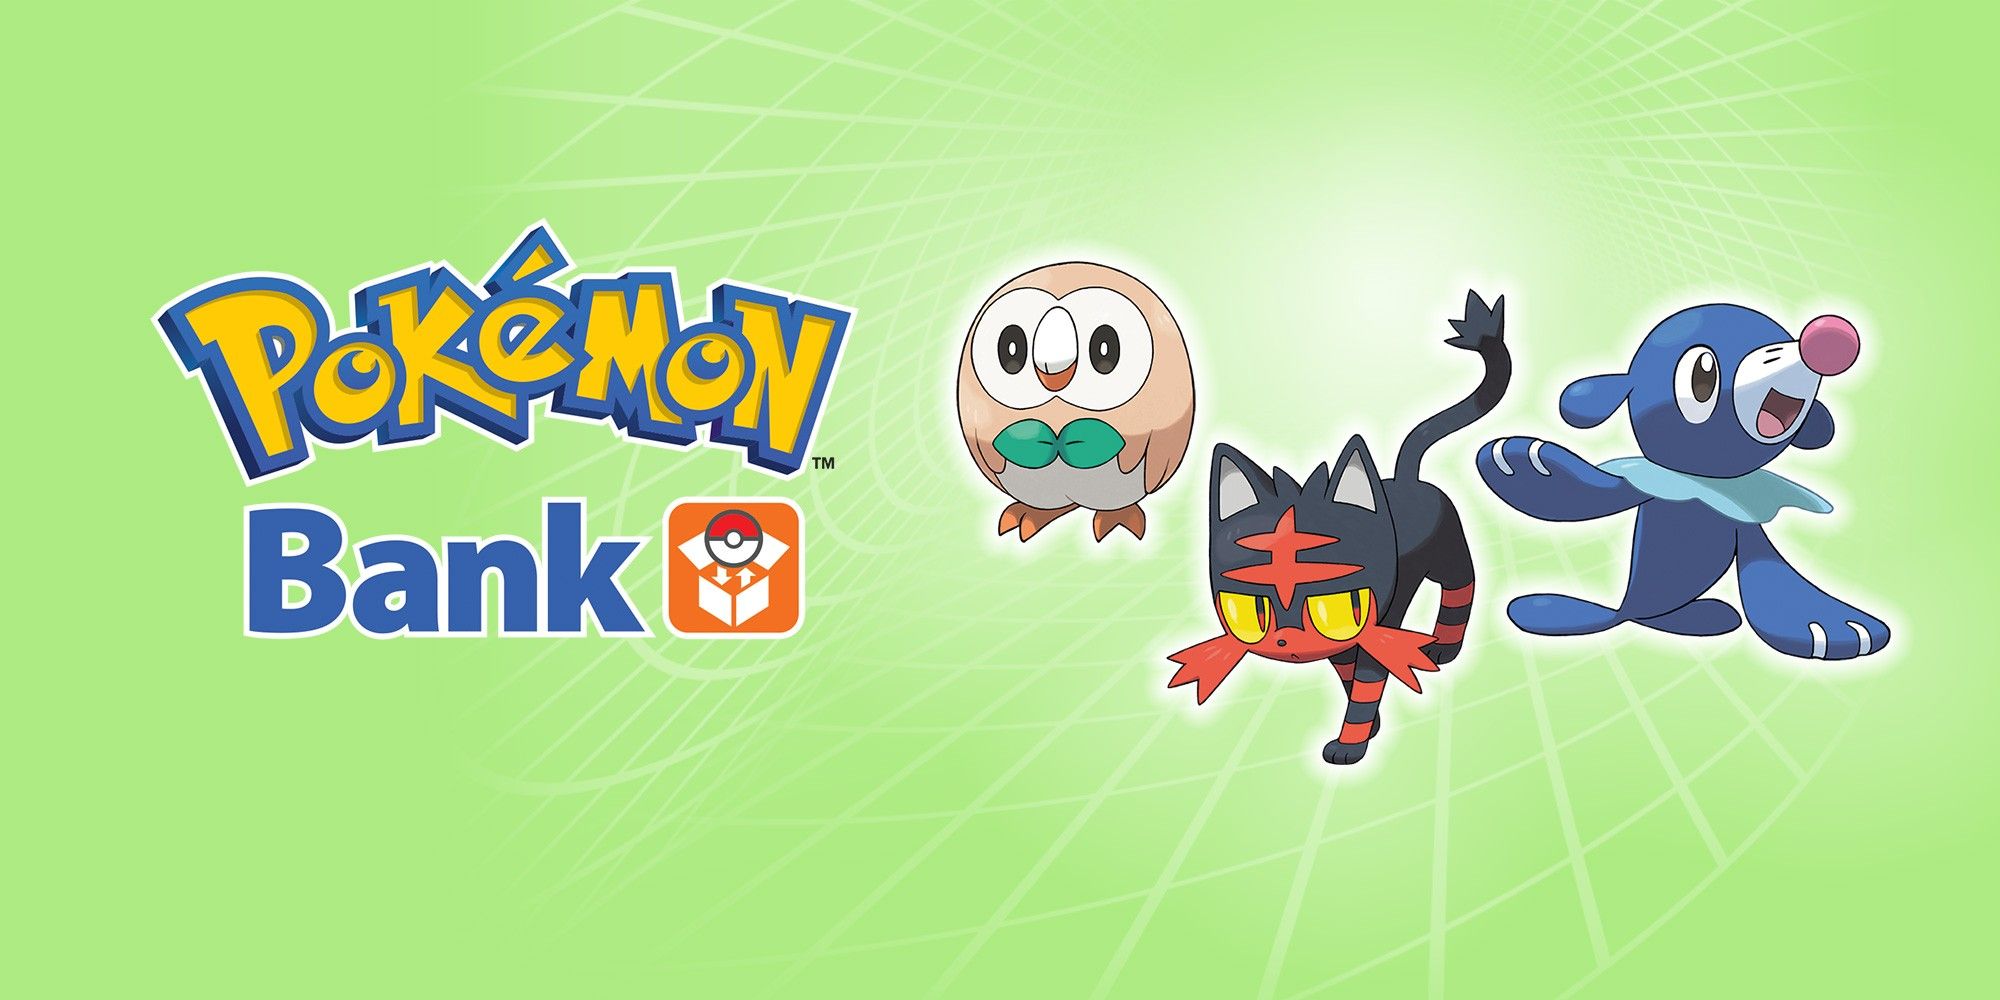 Pokemon Bank logo and starter Pokemon